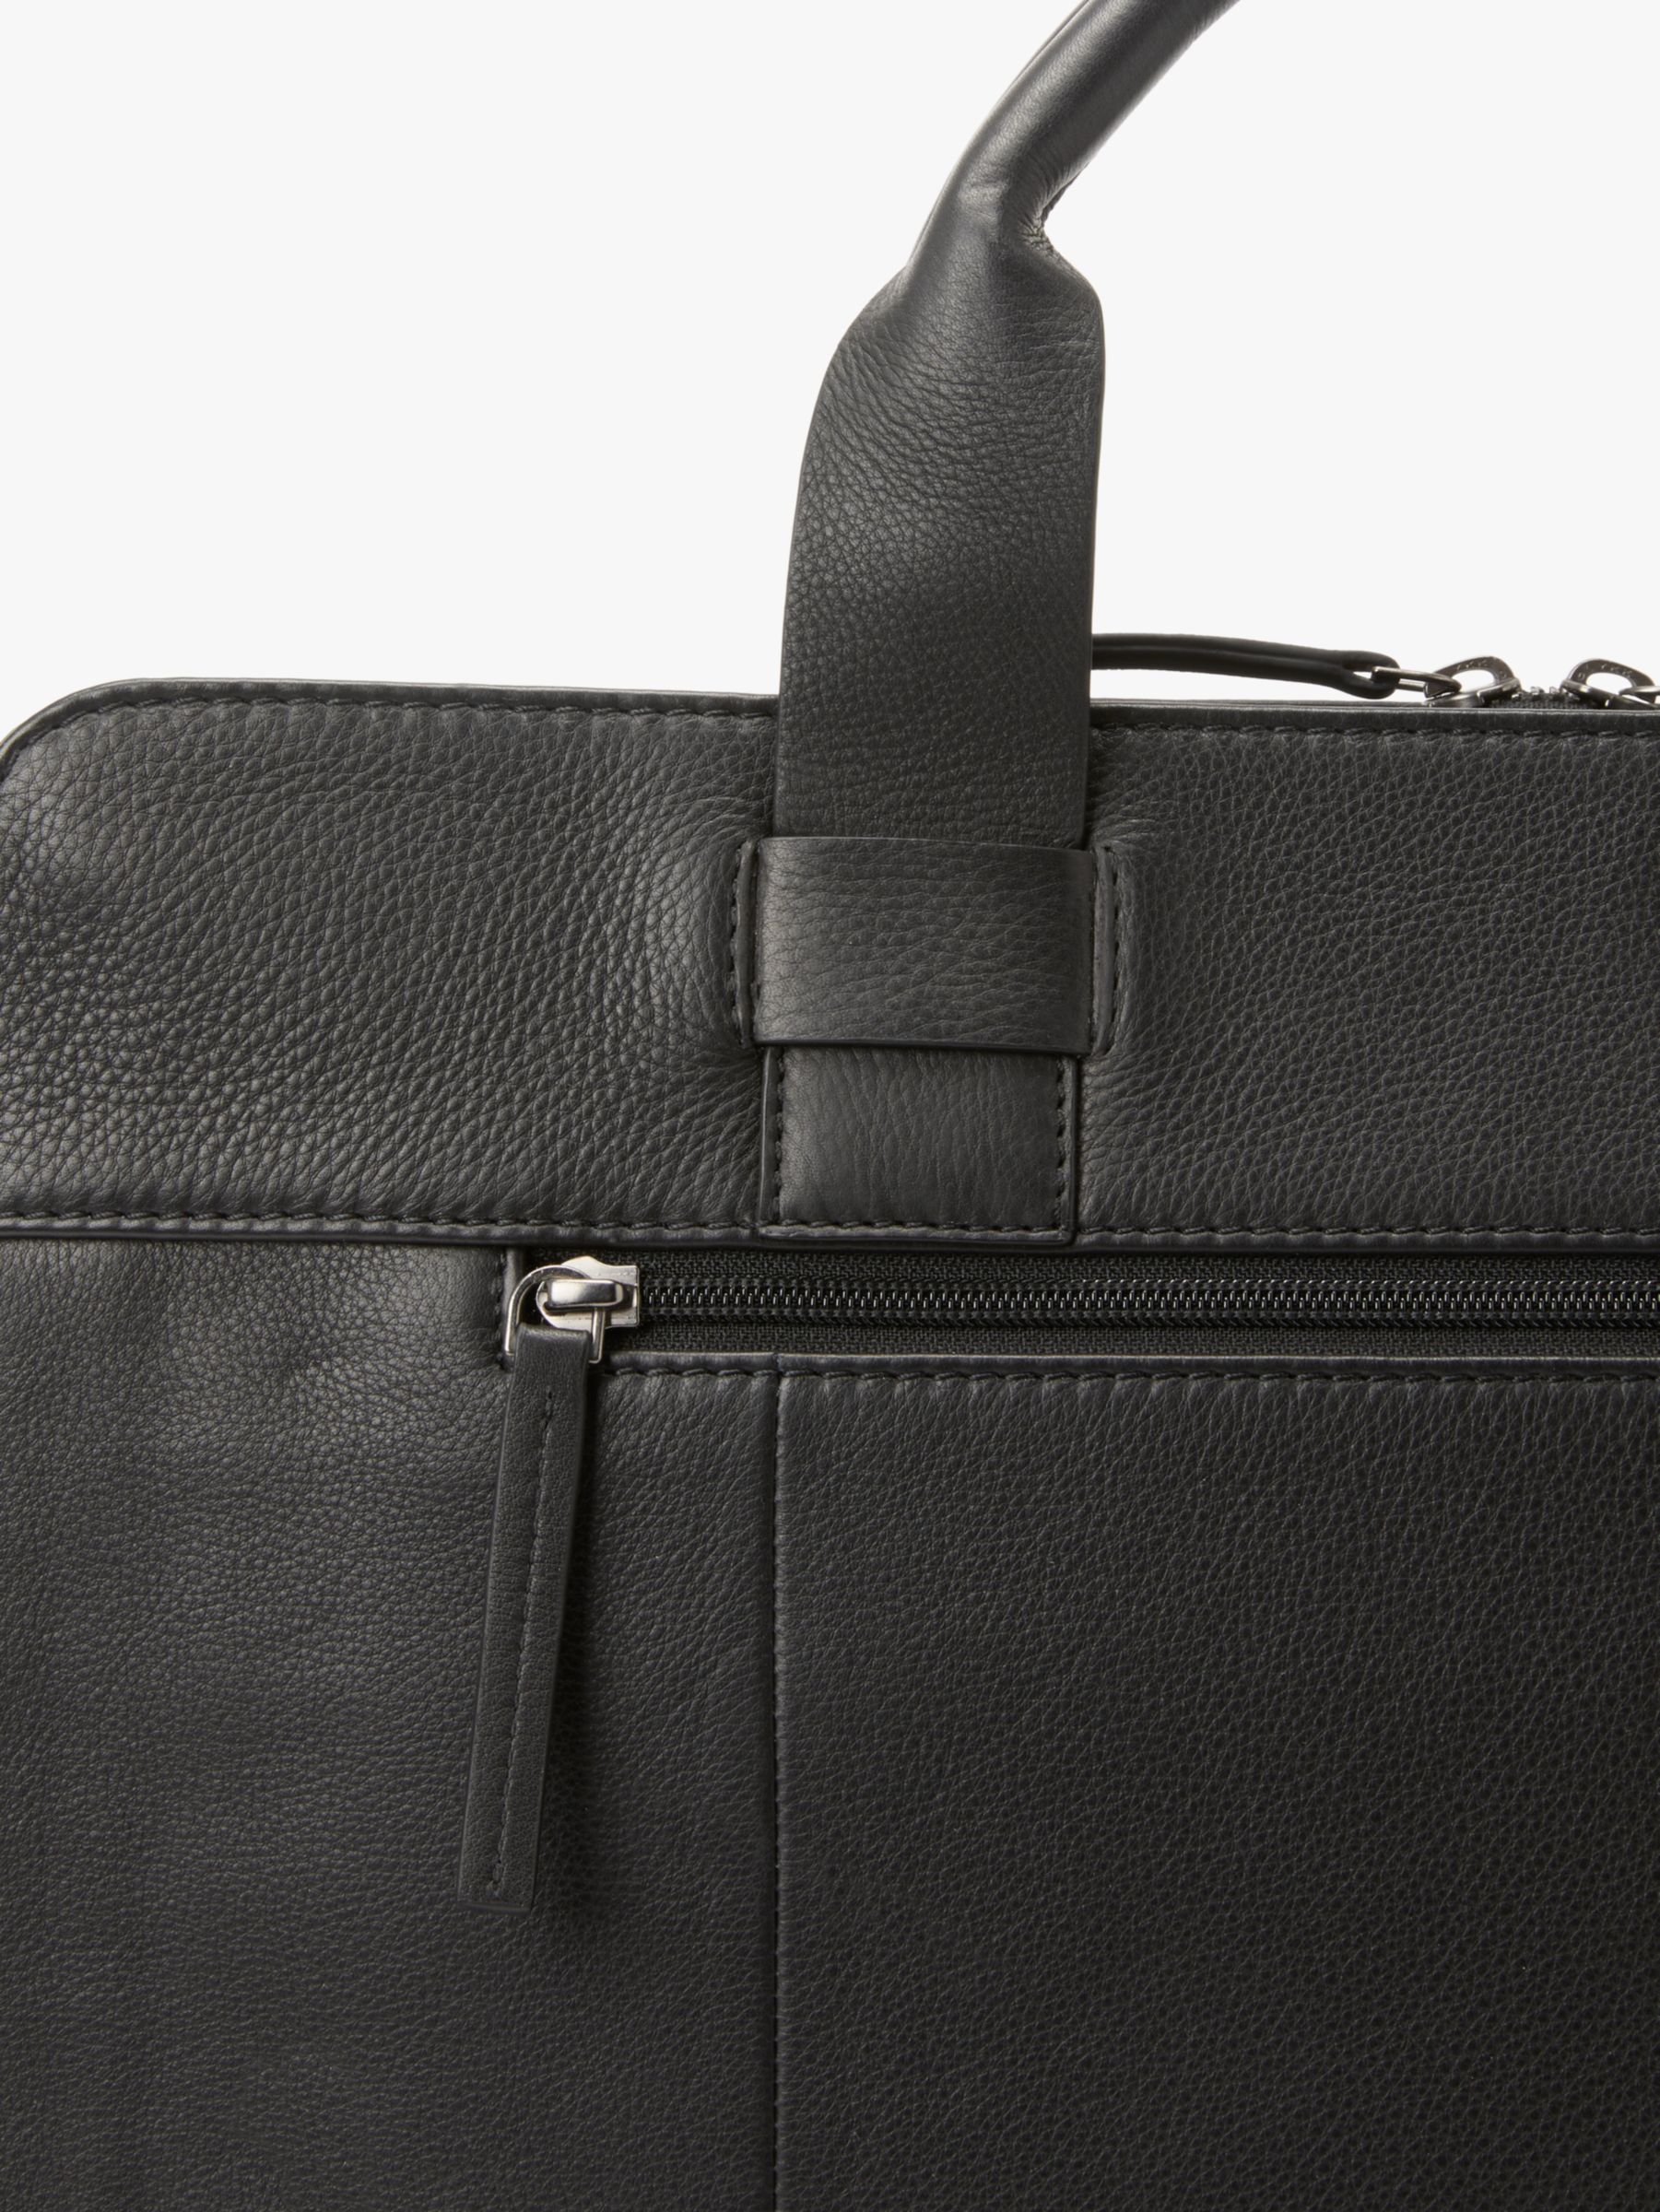 Buy John Lewis Oslo Leather Slim Briefcase Online at johnlewis.com